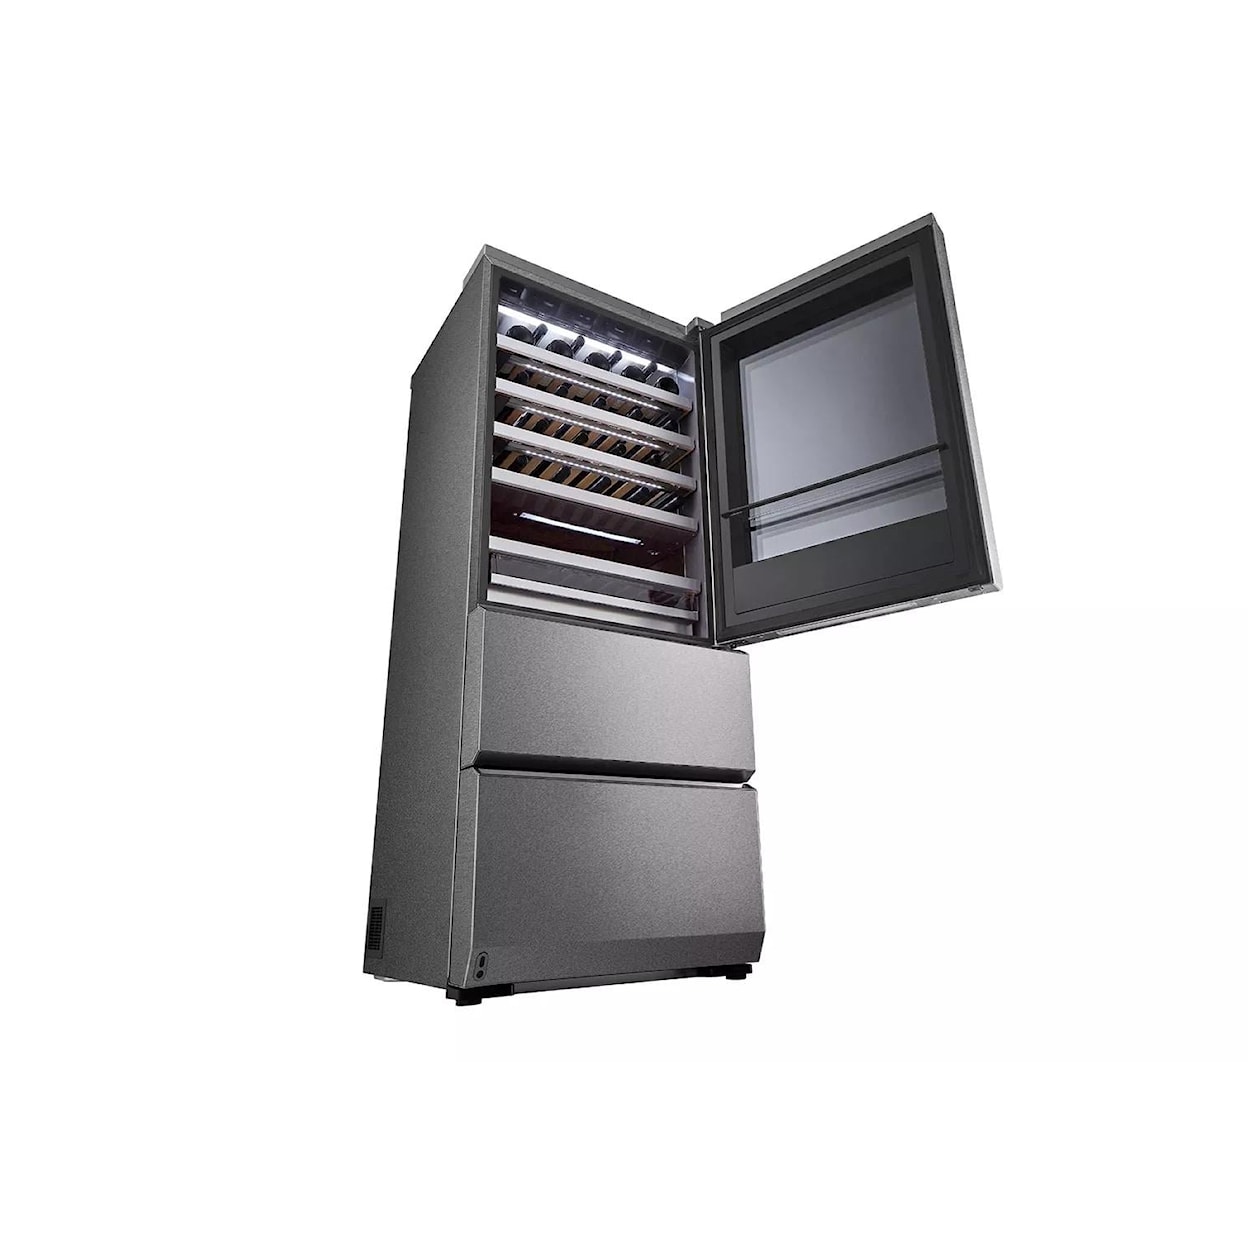 LG Appliances Refrigerators Refrigerator - Wine Cooler